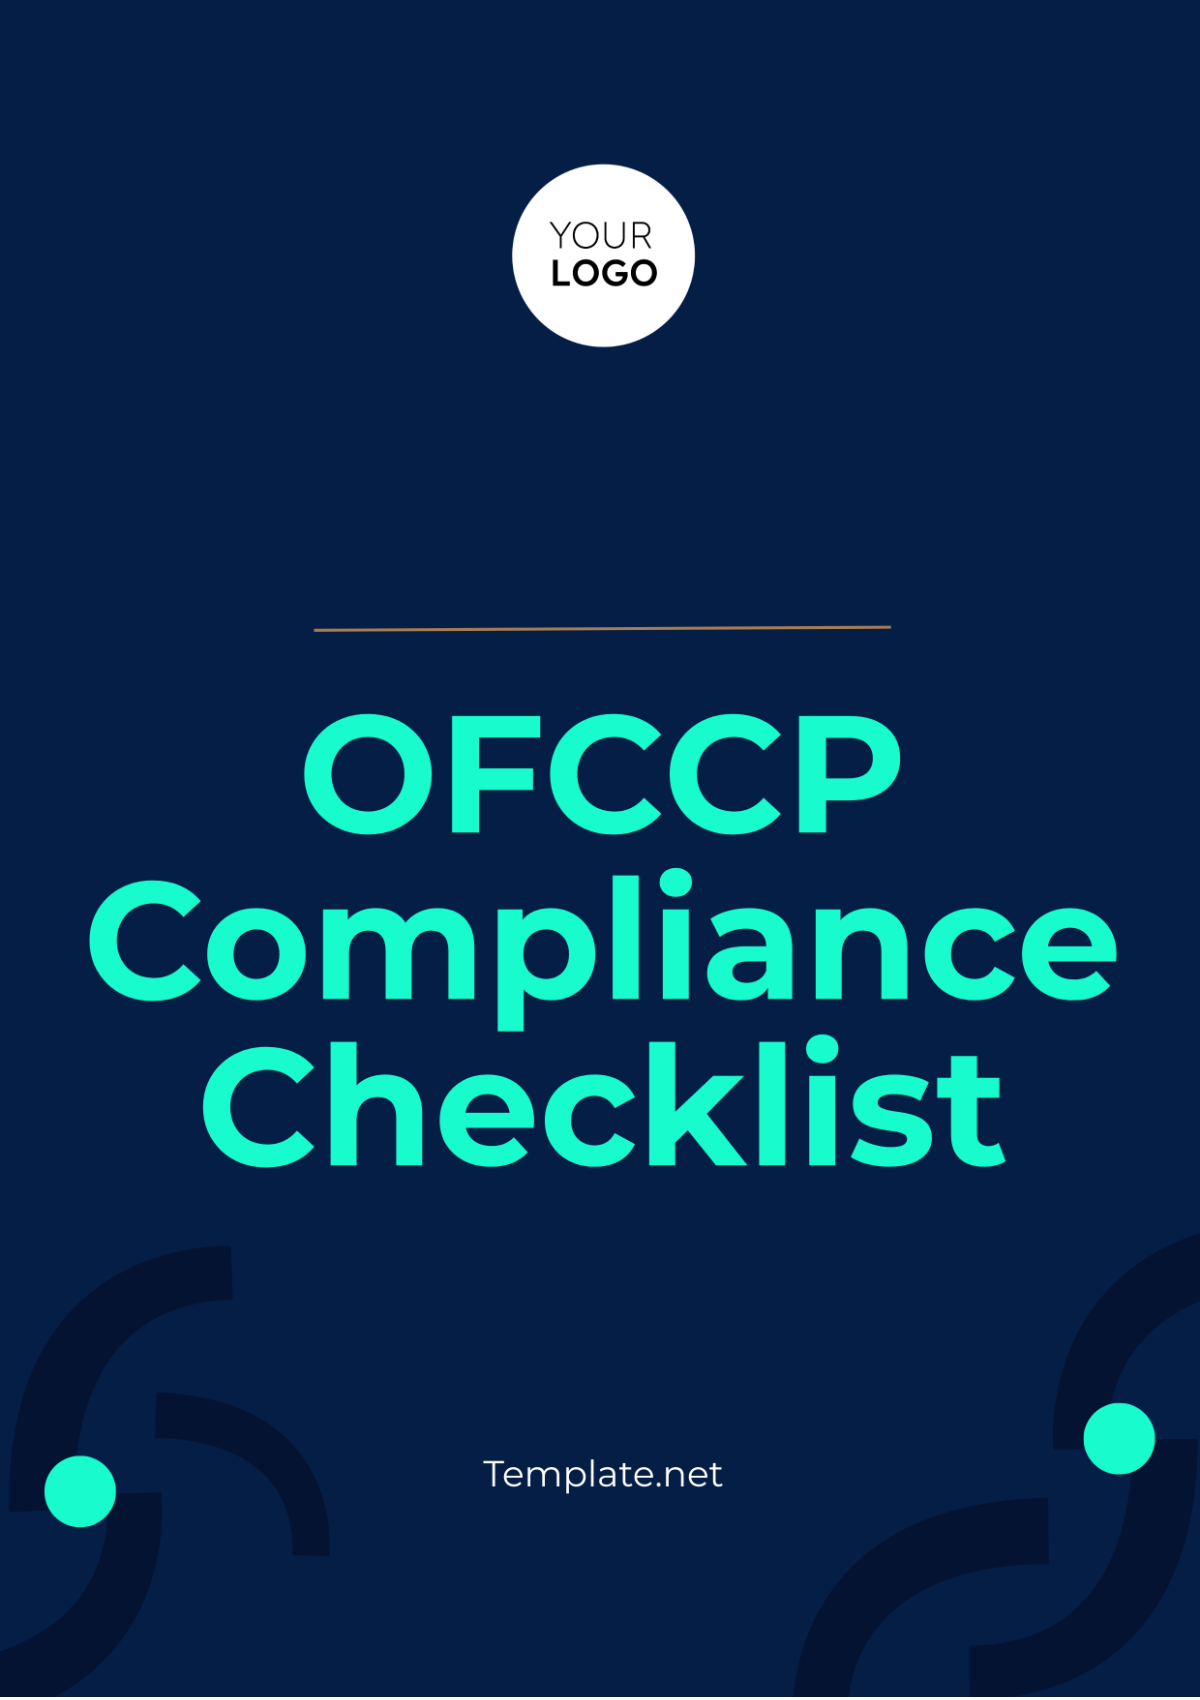 OFCCP Compliance Checklist Template